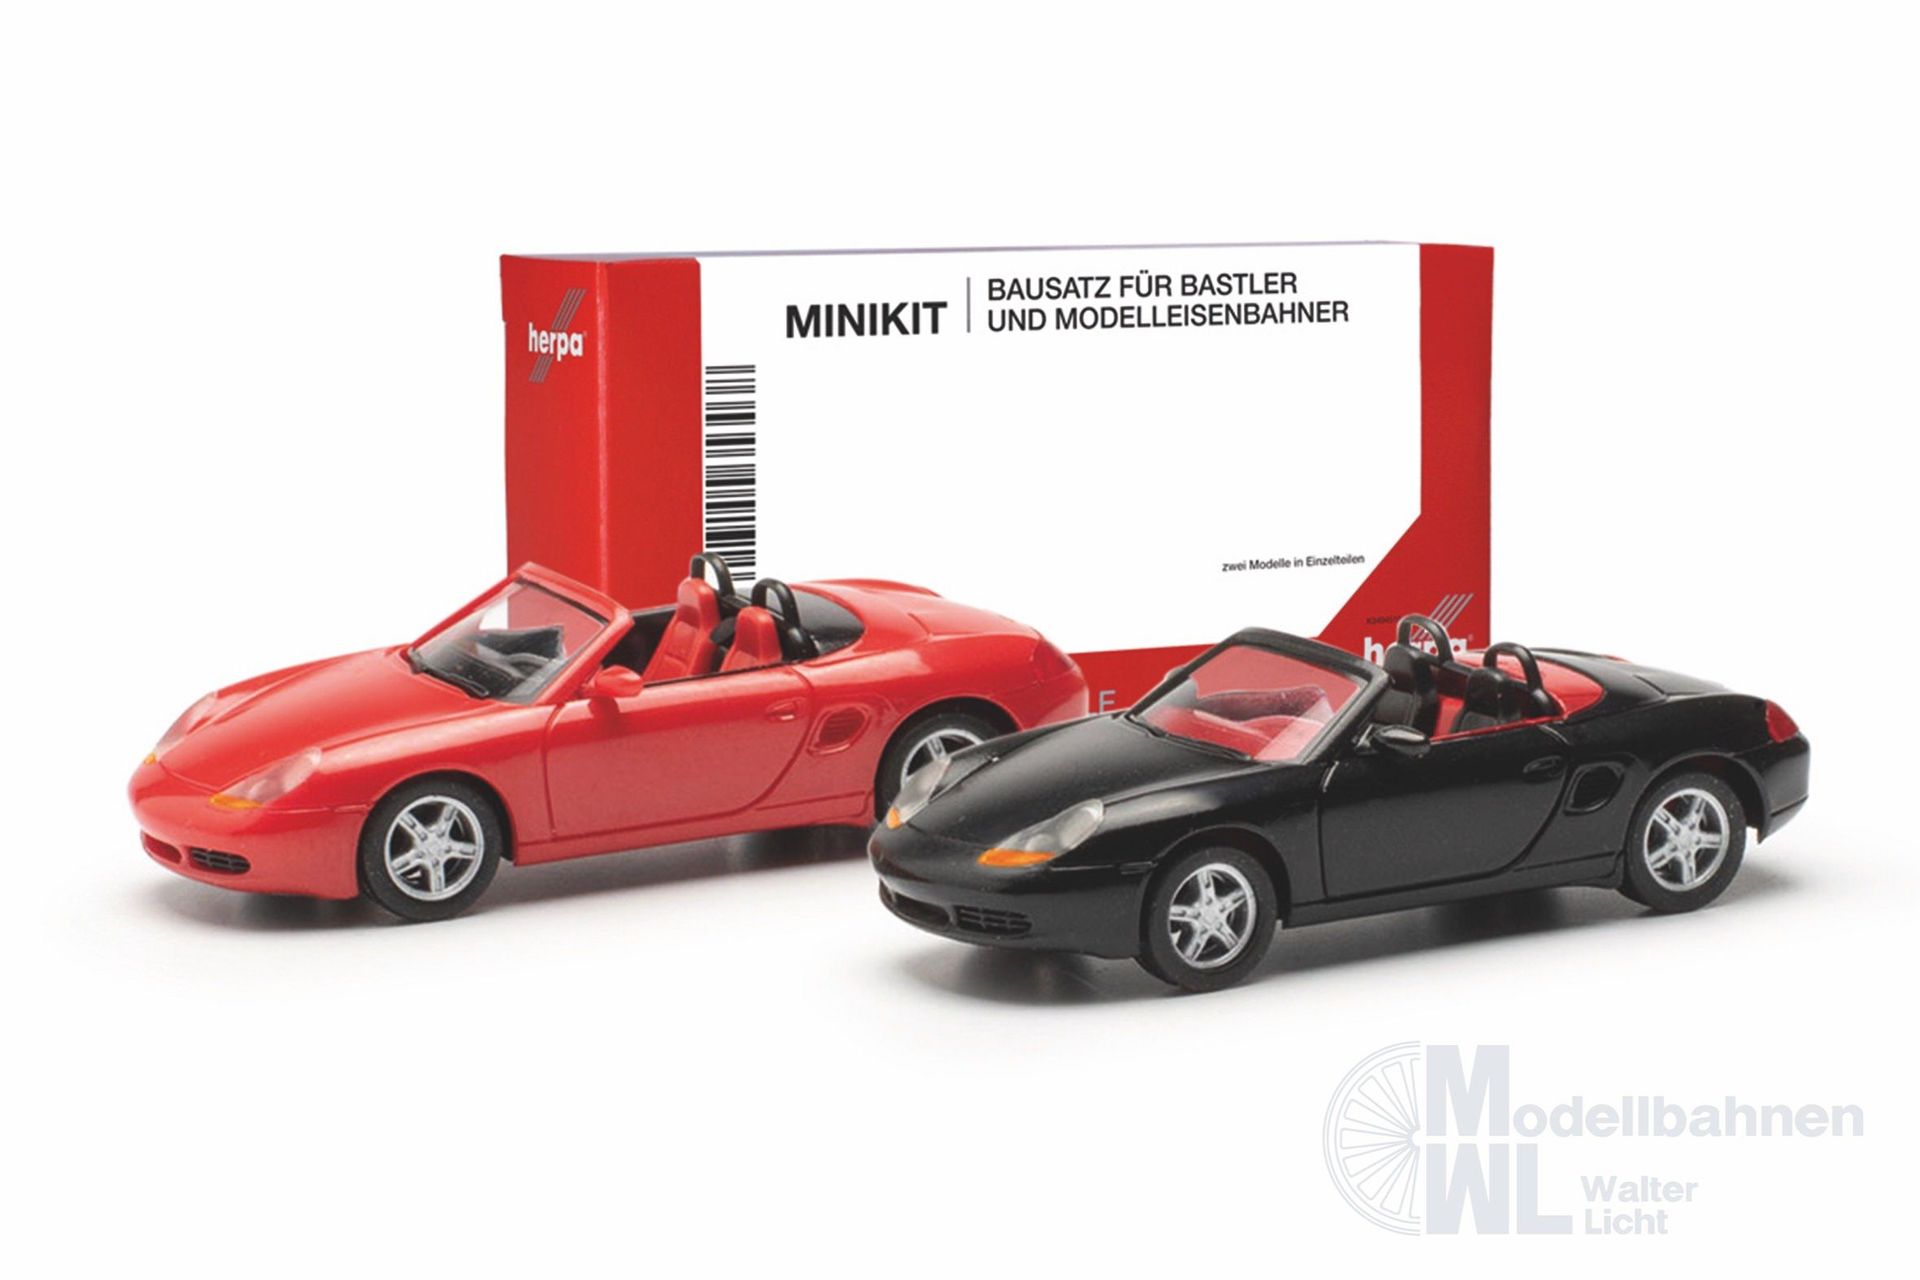 Herpa 013963 - Minikit Porsche Boxster S H0 1:87